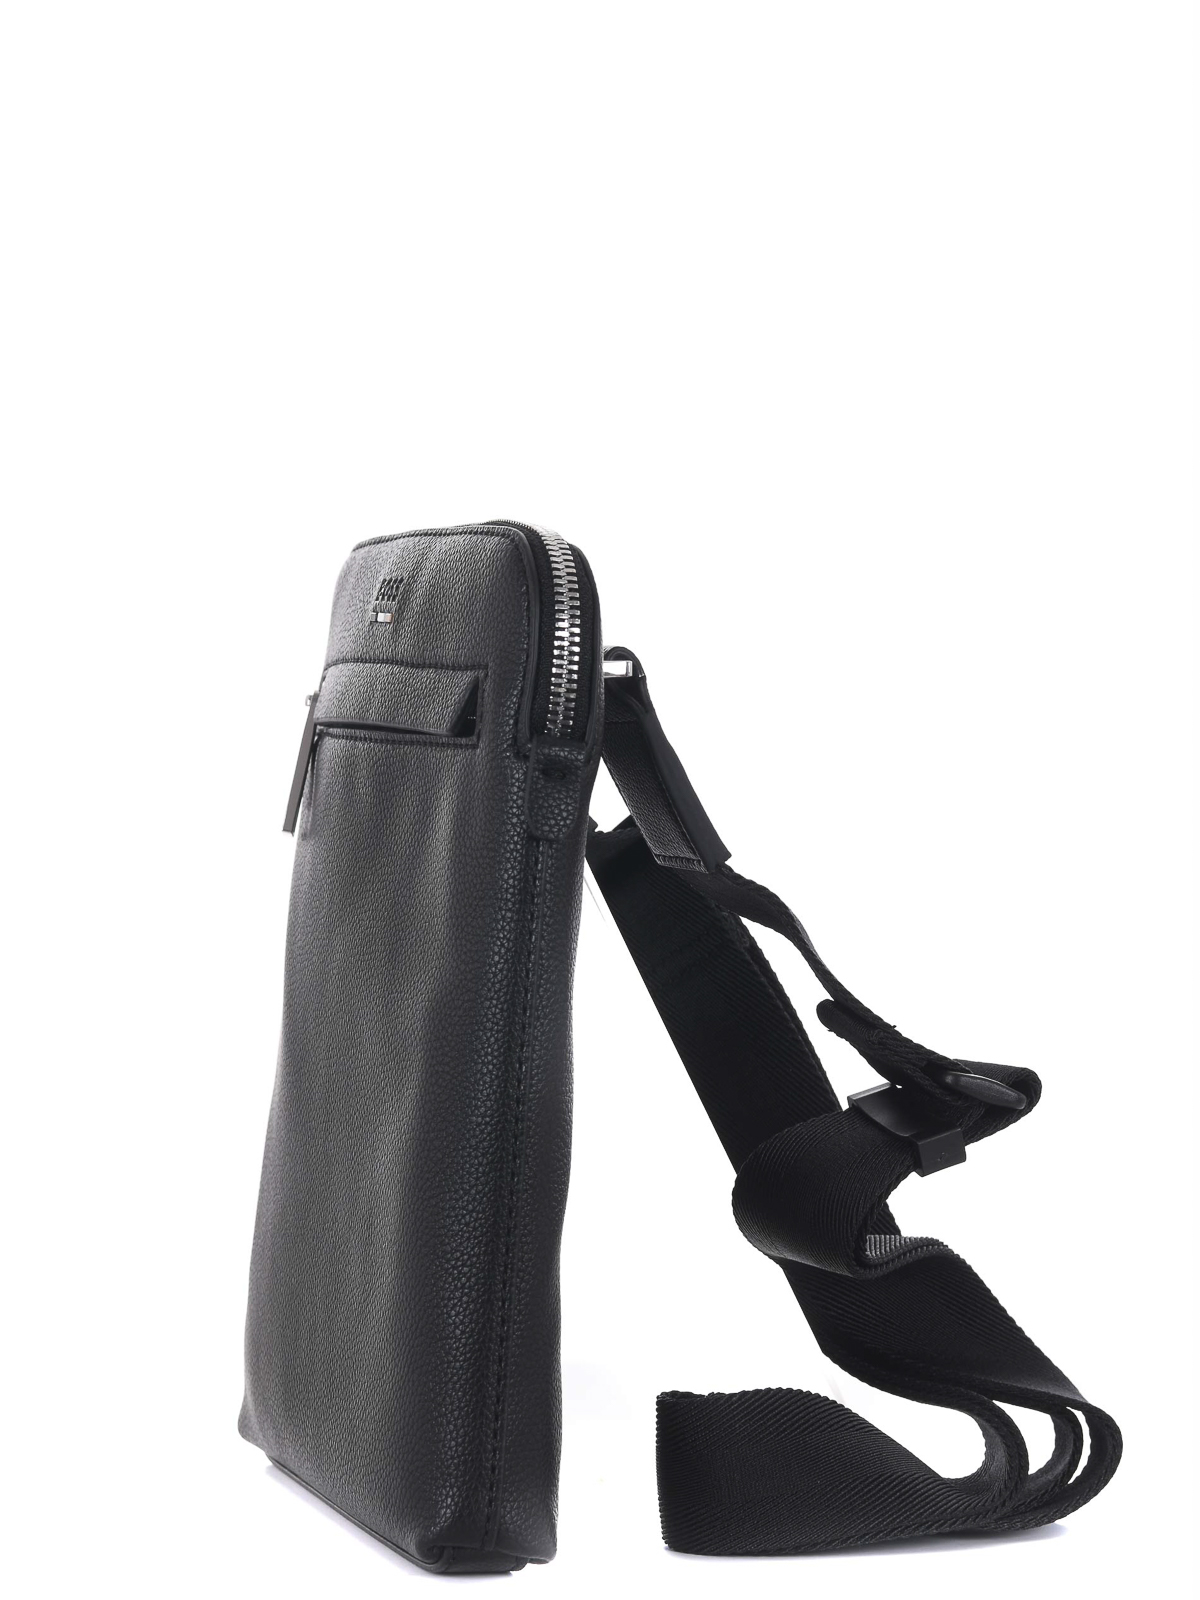 HUGO BOSS Mila Black leather Double handle bag purse business carry-all |  eBay